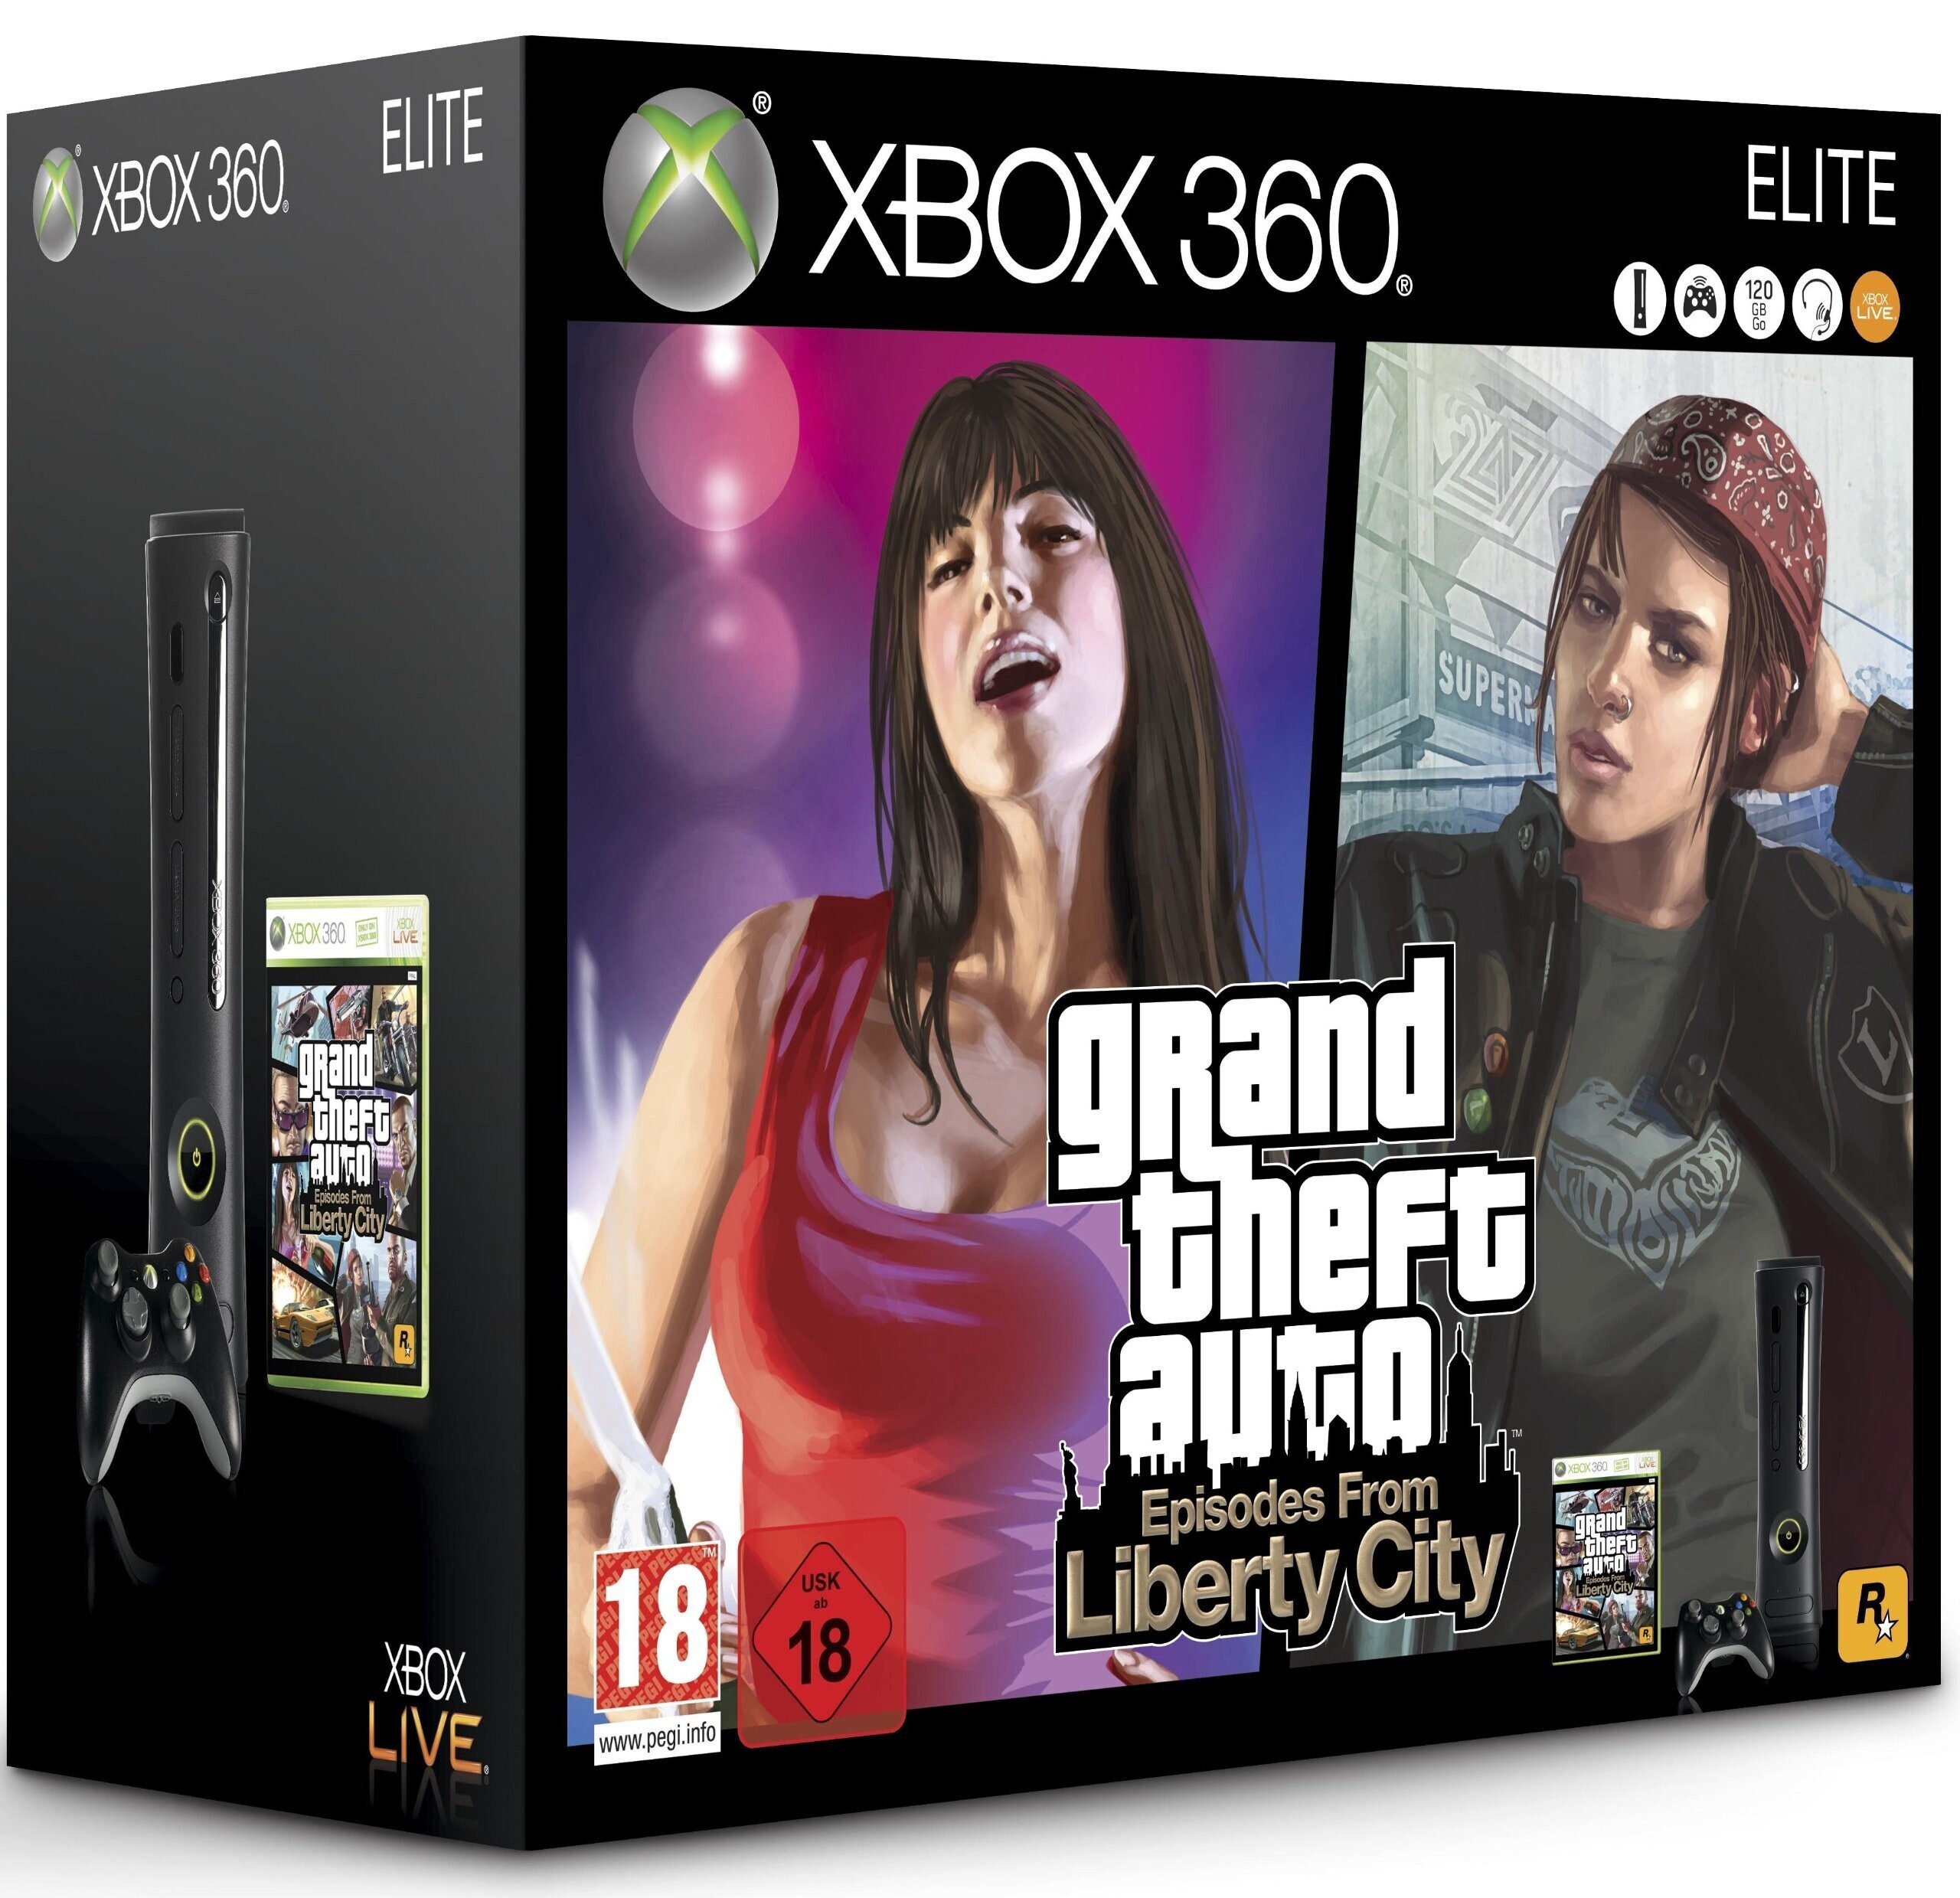  Microsoft Xbox 360 Elite Grand Theft Auto Episodes of Liberty City Bundle